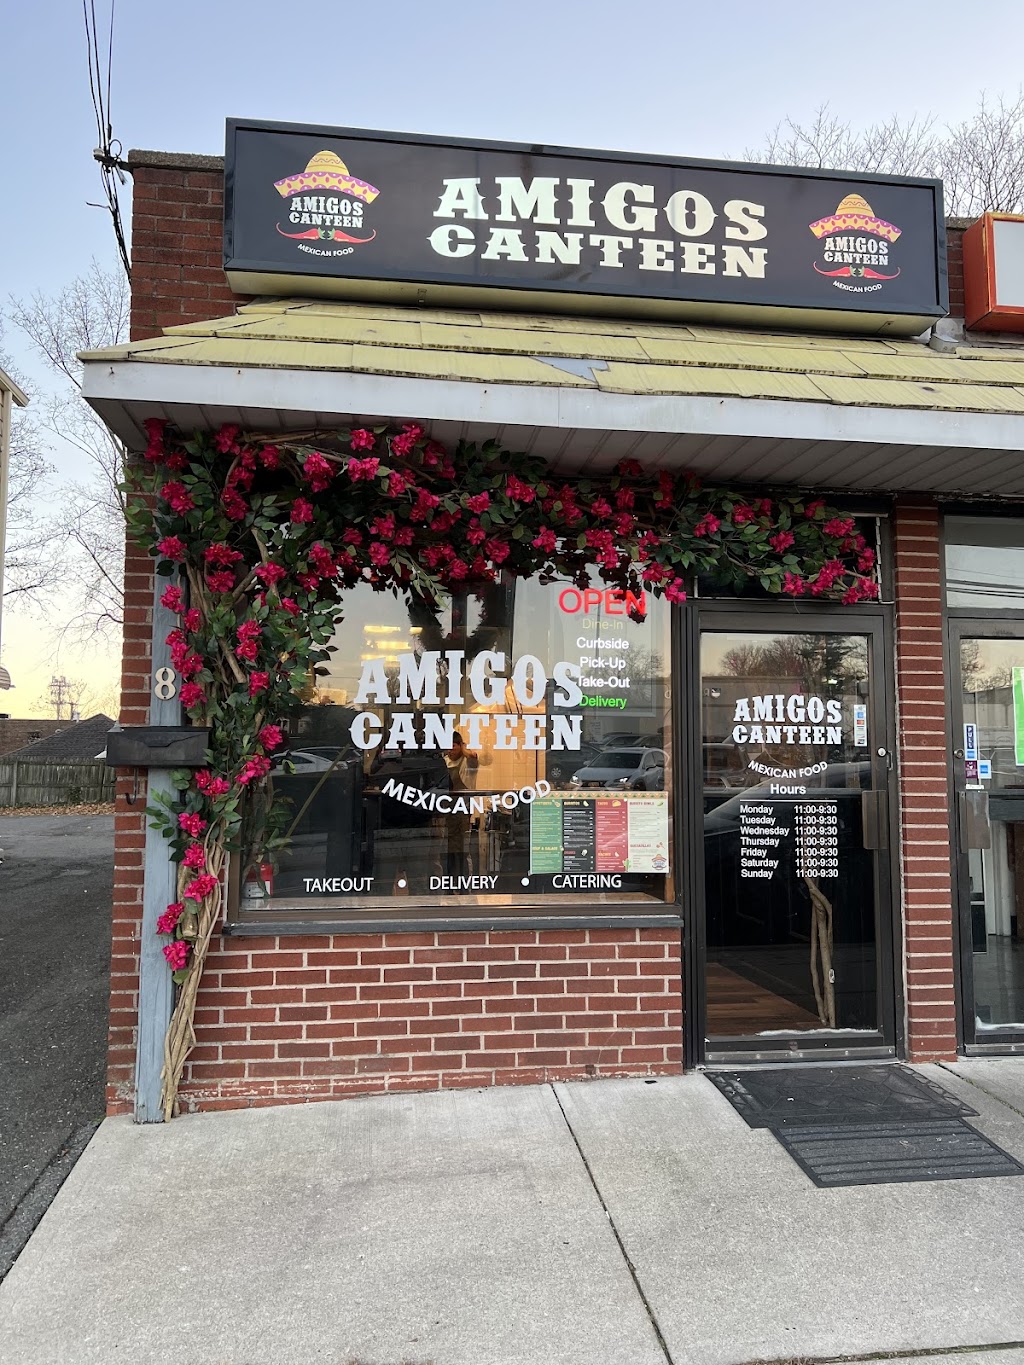 Amigos Canteen | 8A W Prospect St, Waldwick, NJ 07463 | Phone: (201) 942-6300